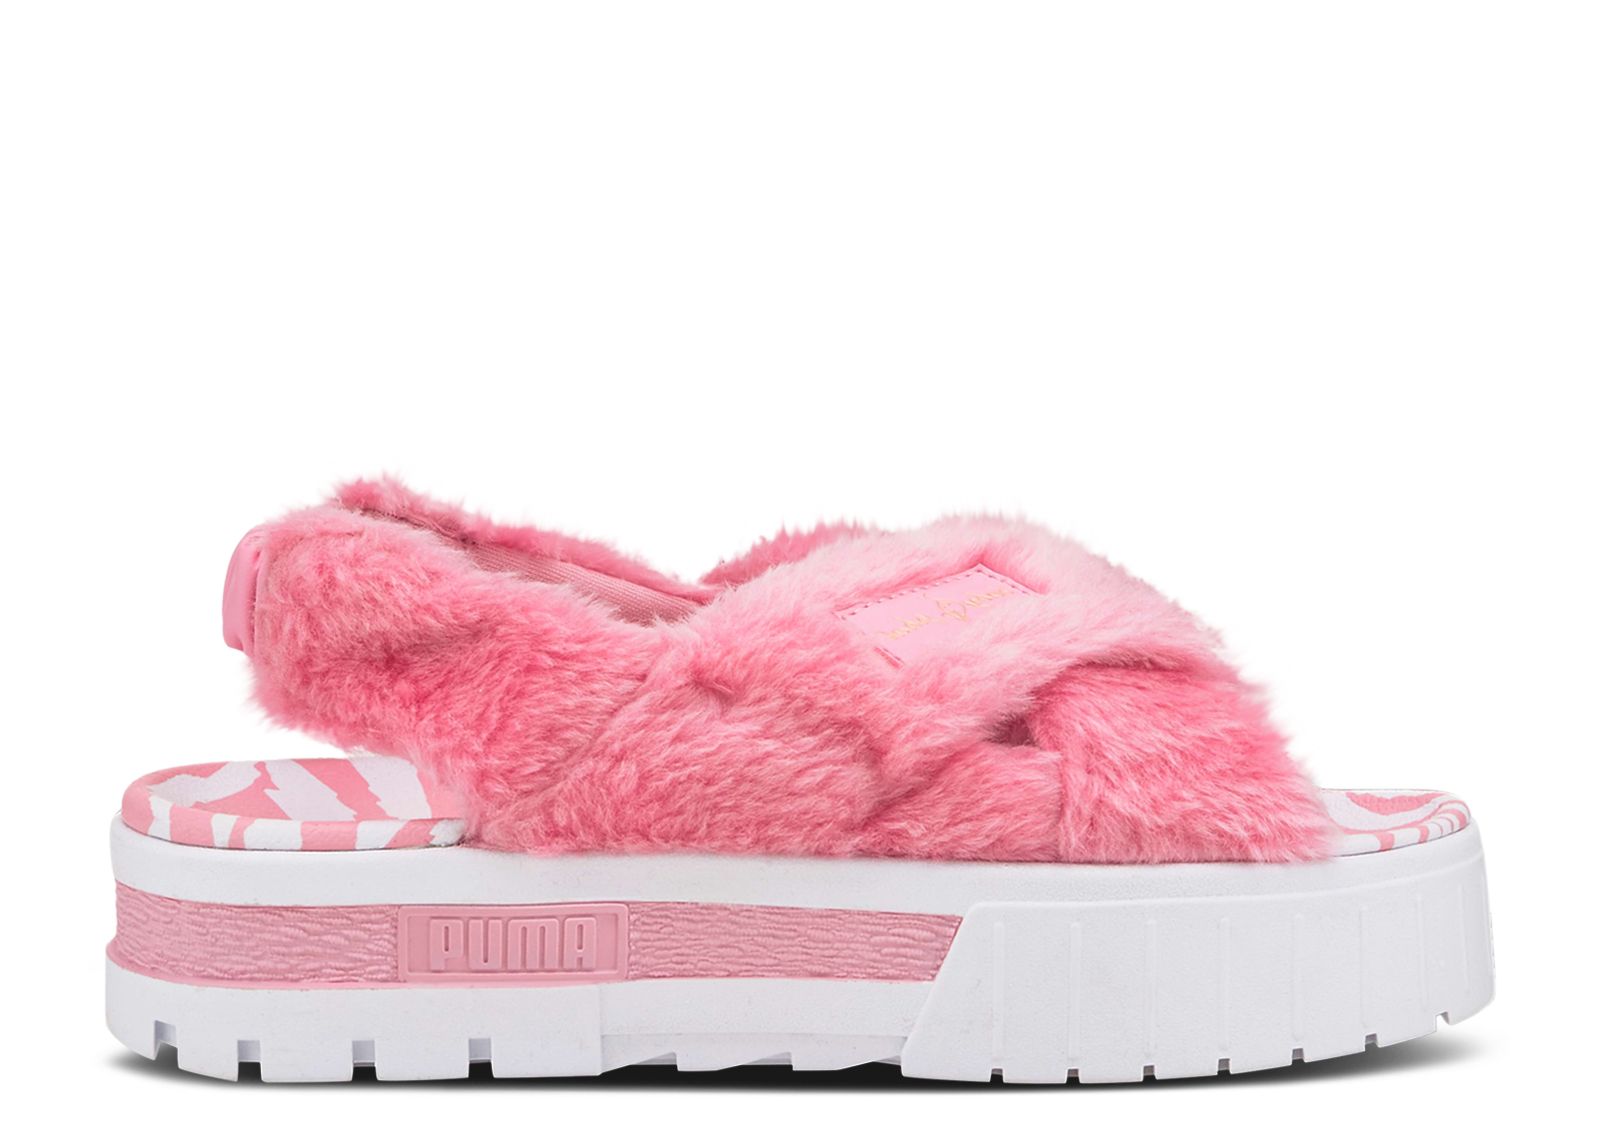 Кроссовки Puma Baby Phat X Wmns Mayze Sandals 'Prism Pink White', розовый